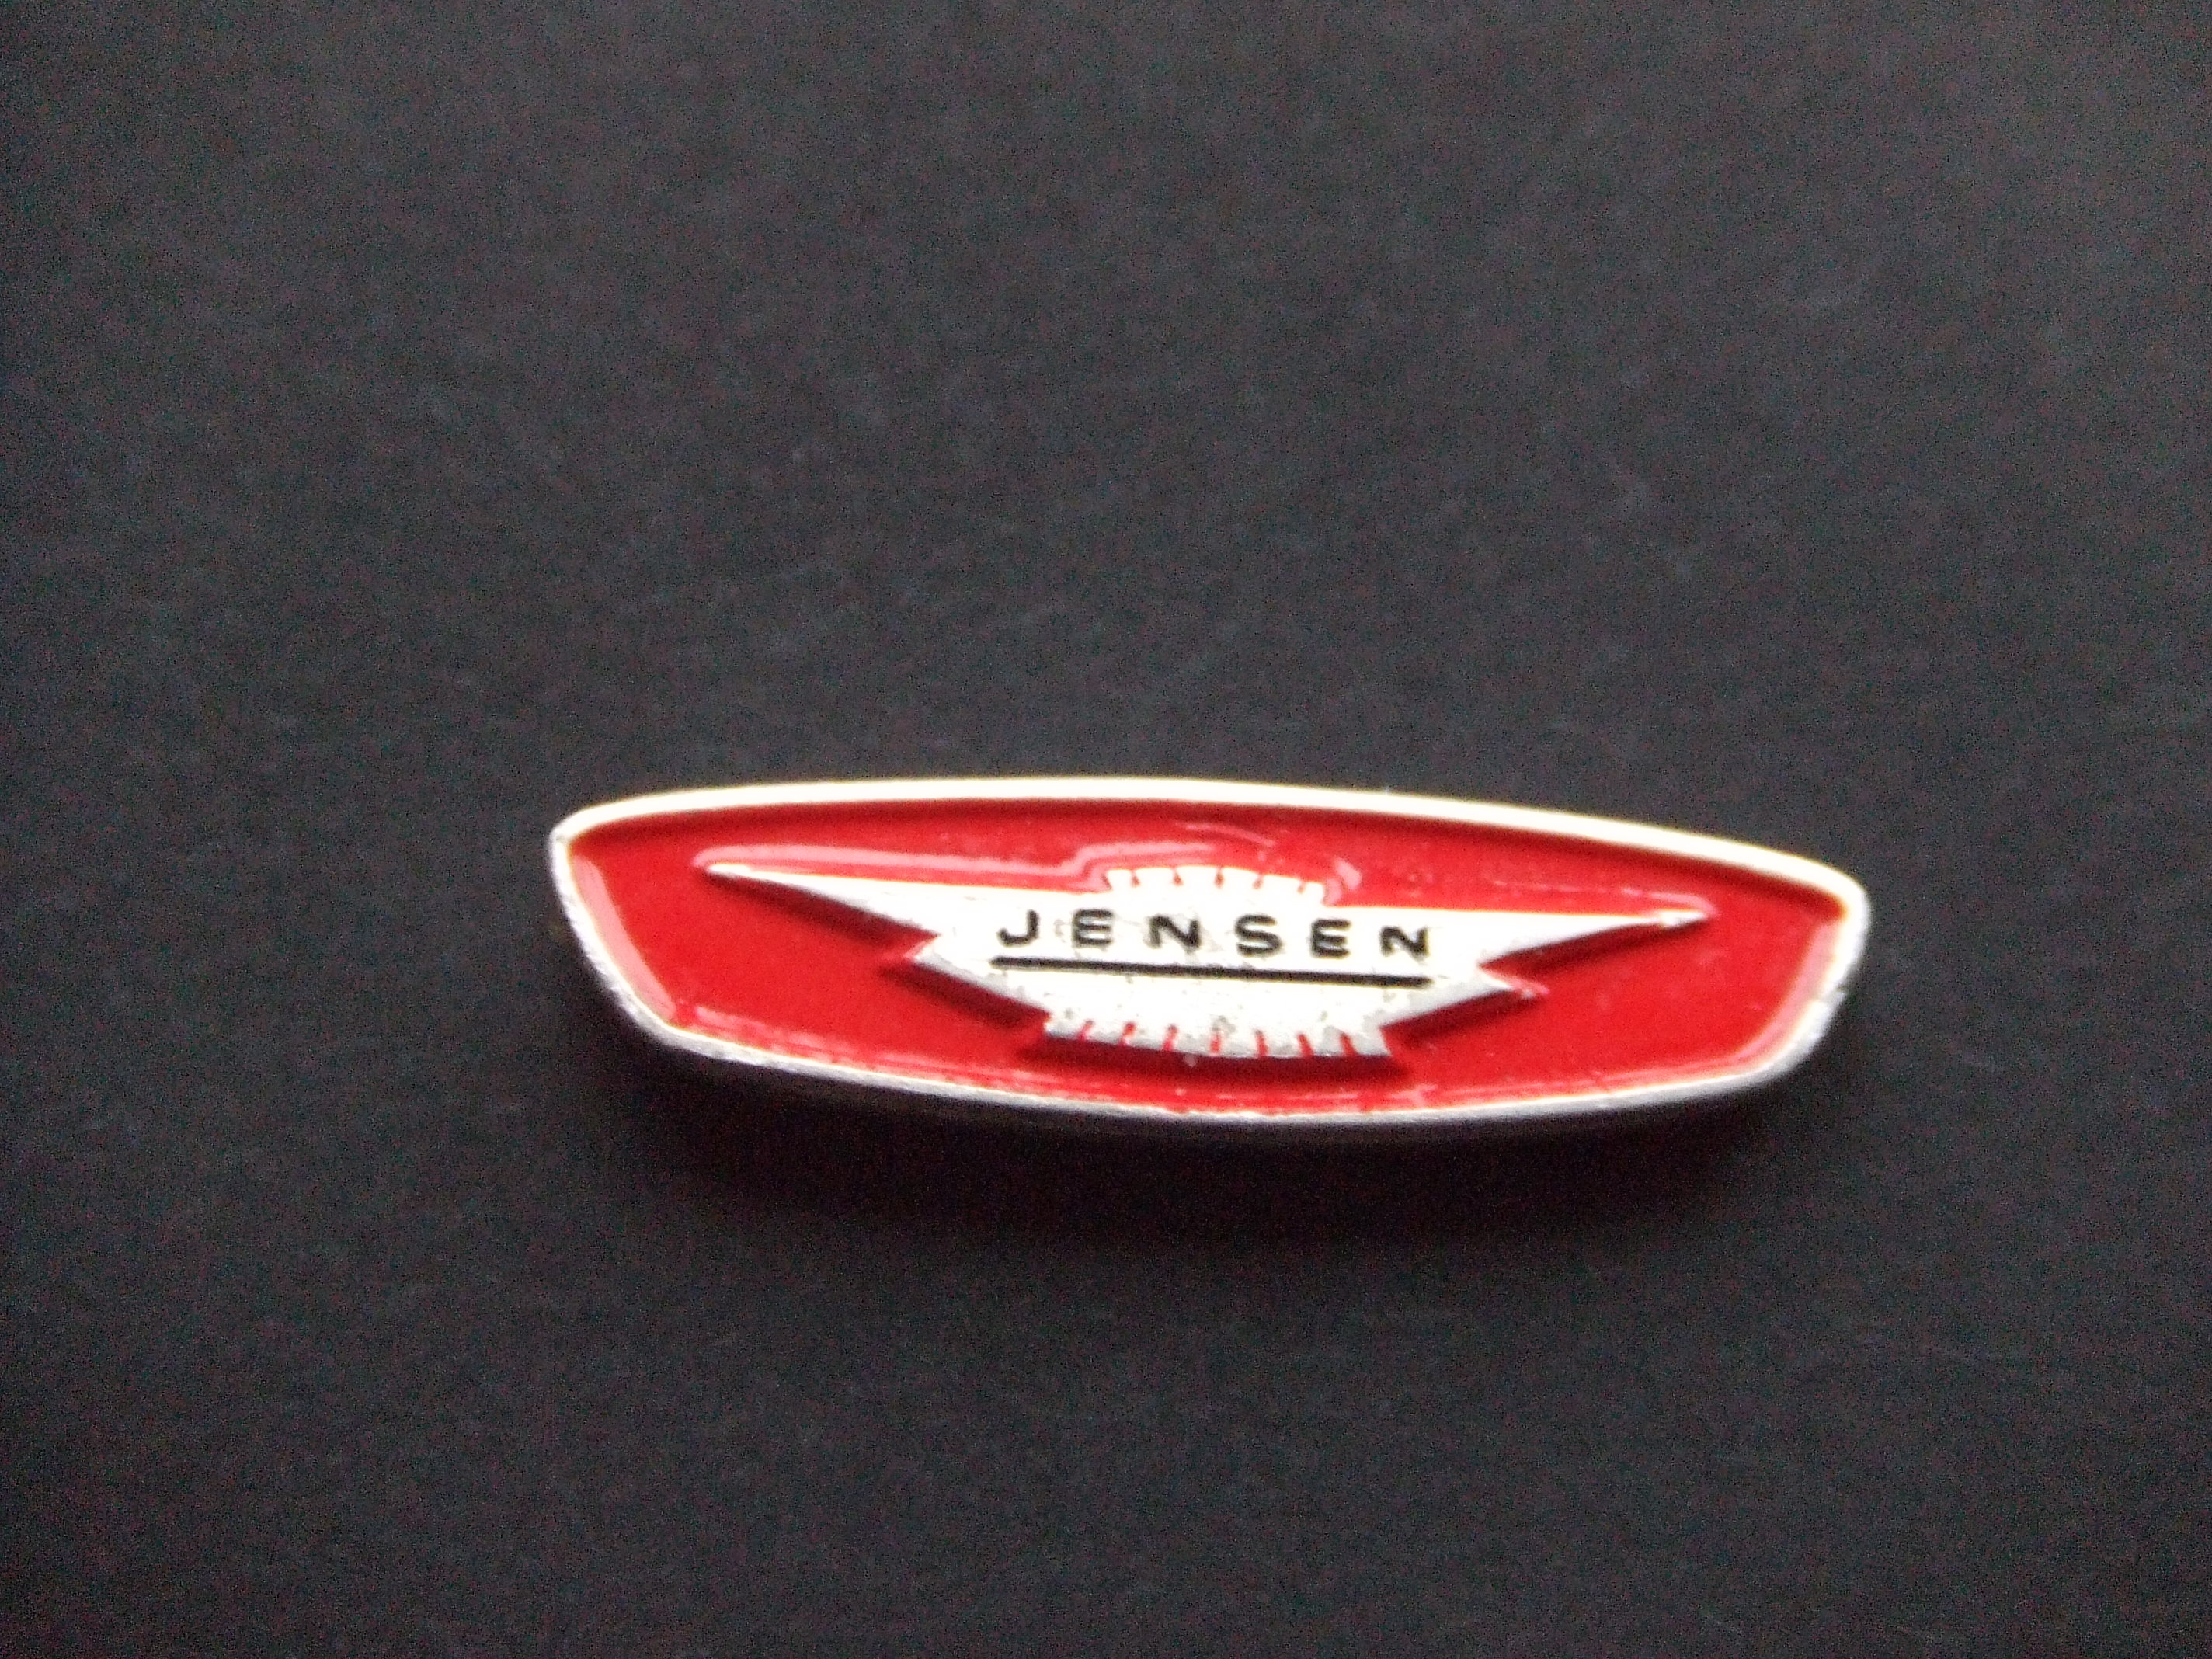 Jensen Motors Brits automerk oldtimer